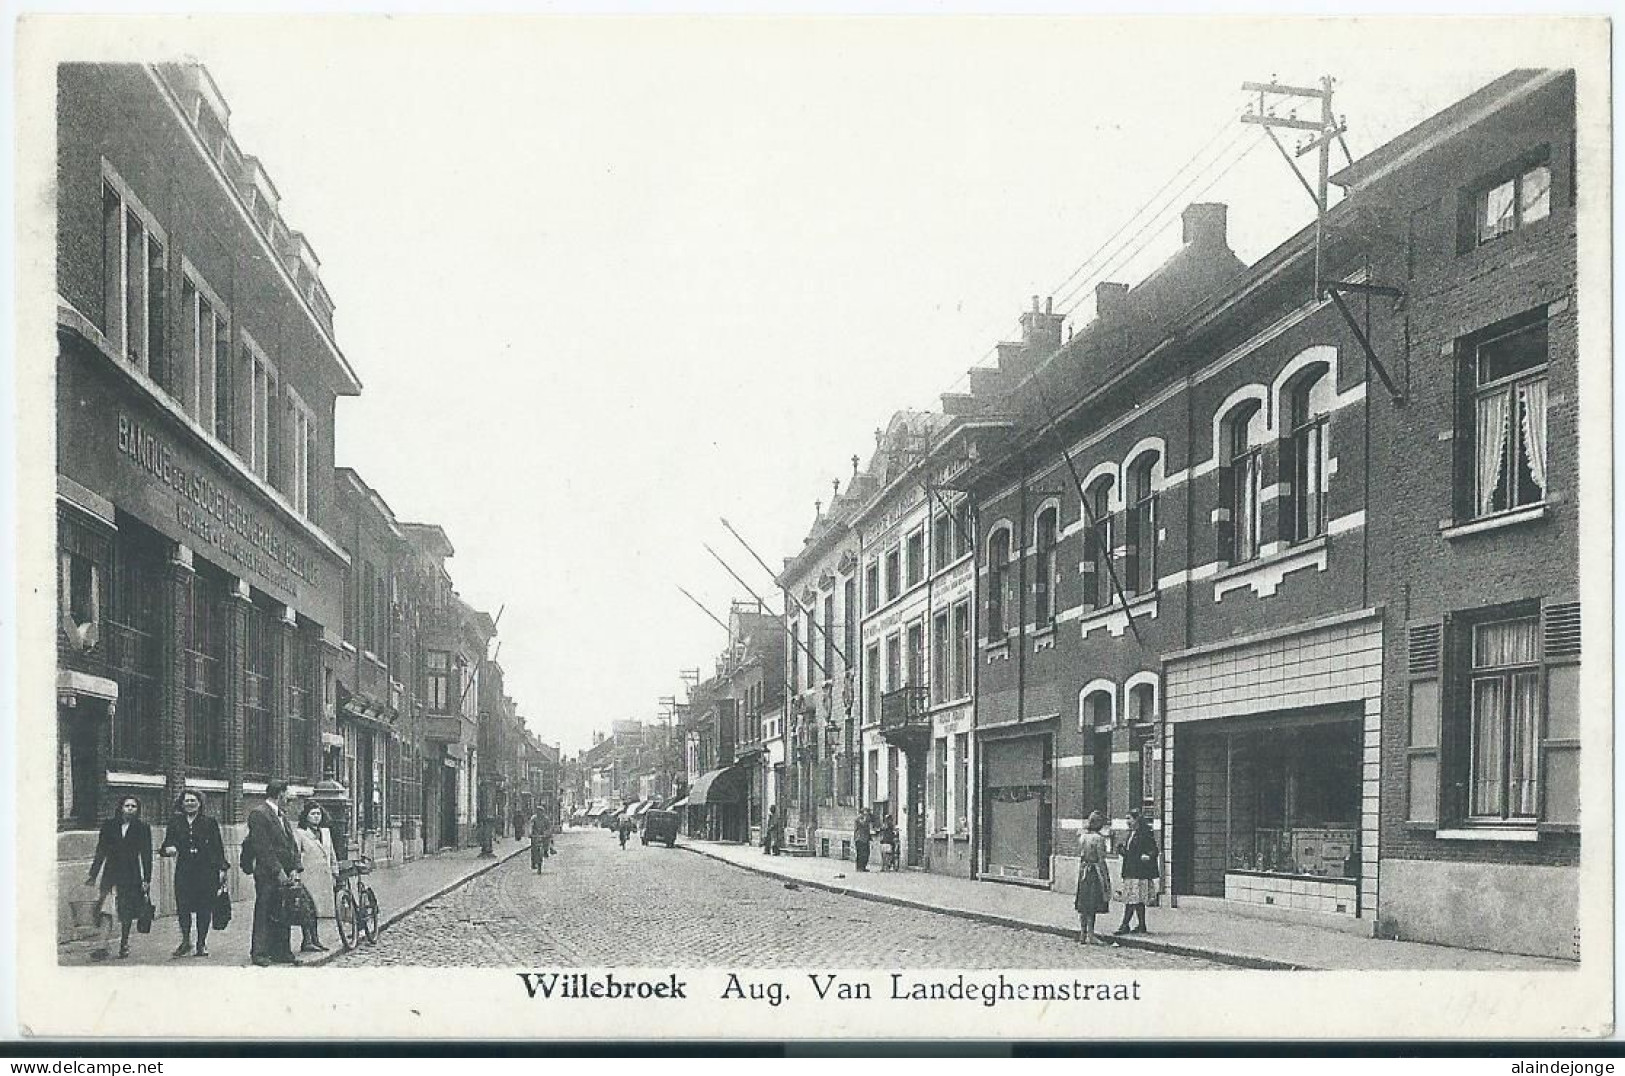 Willebroek - Willebroeck - Aug. Van Landeghemstraat  - Willebrök